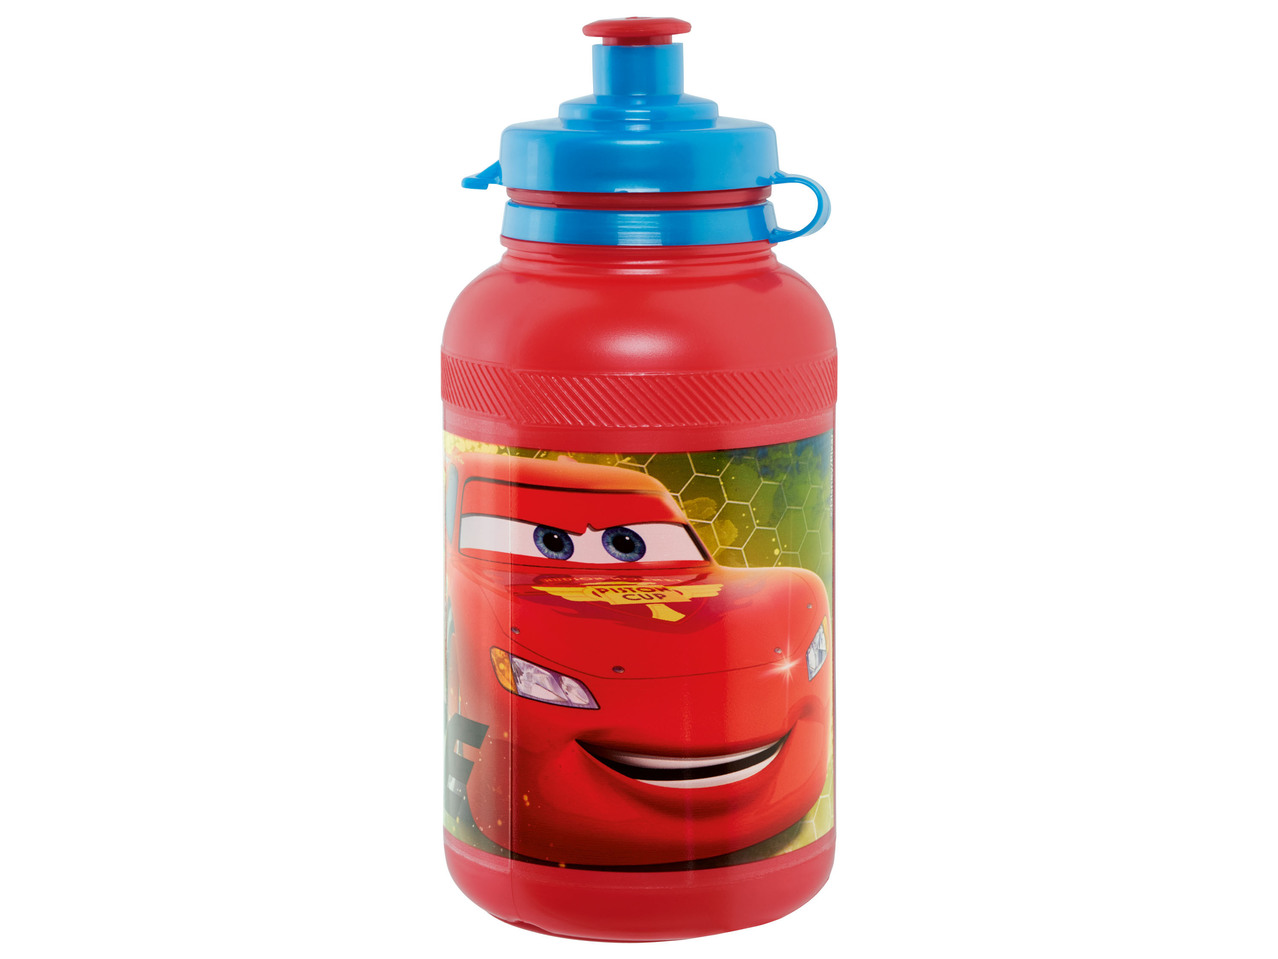 "Frozen, Minions, Cars" Kids' Water Bottle or Lunch Box